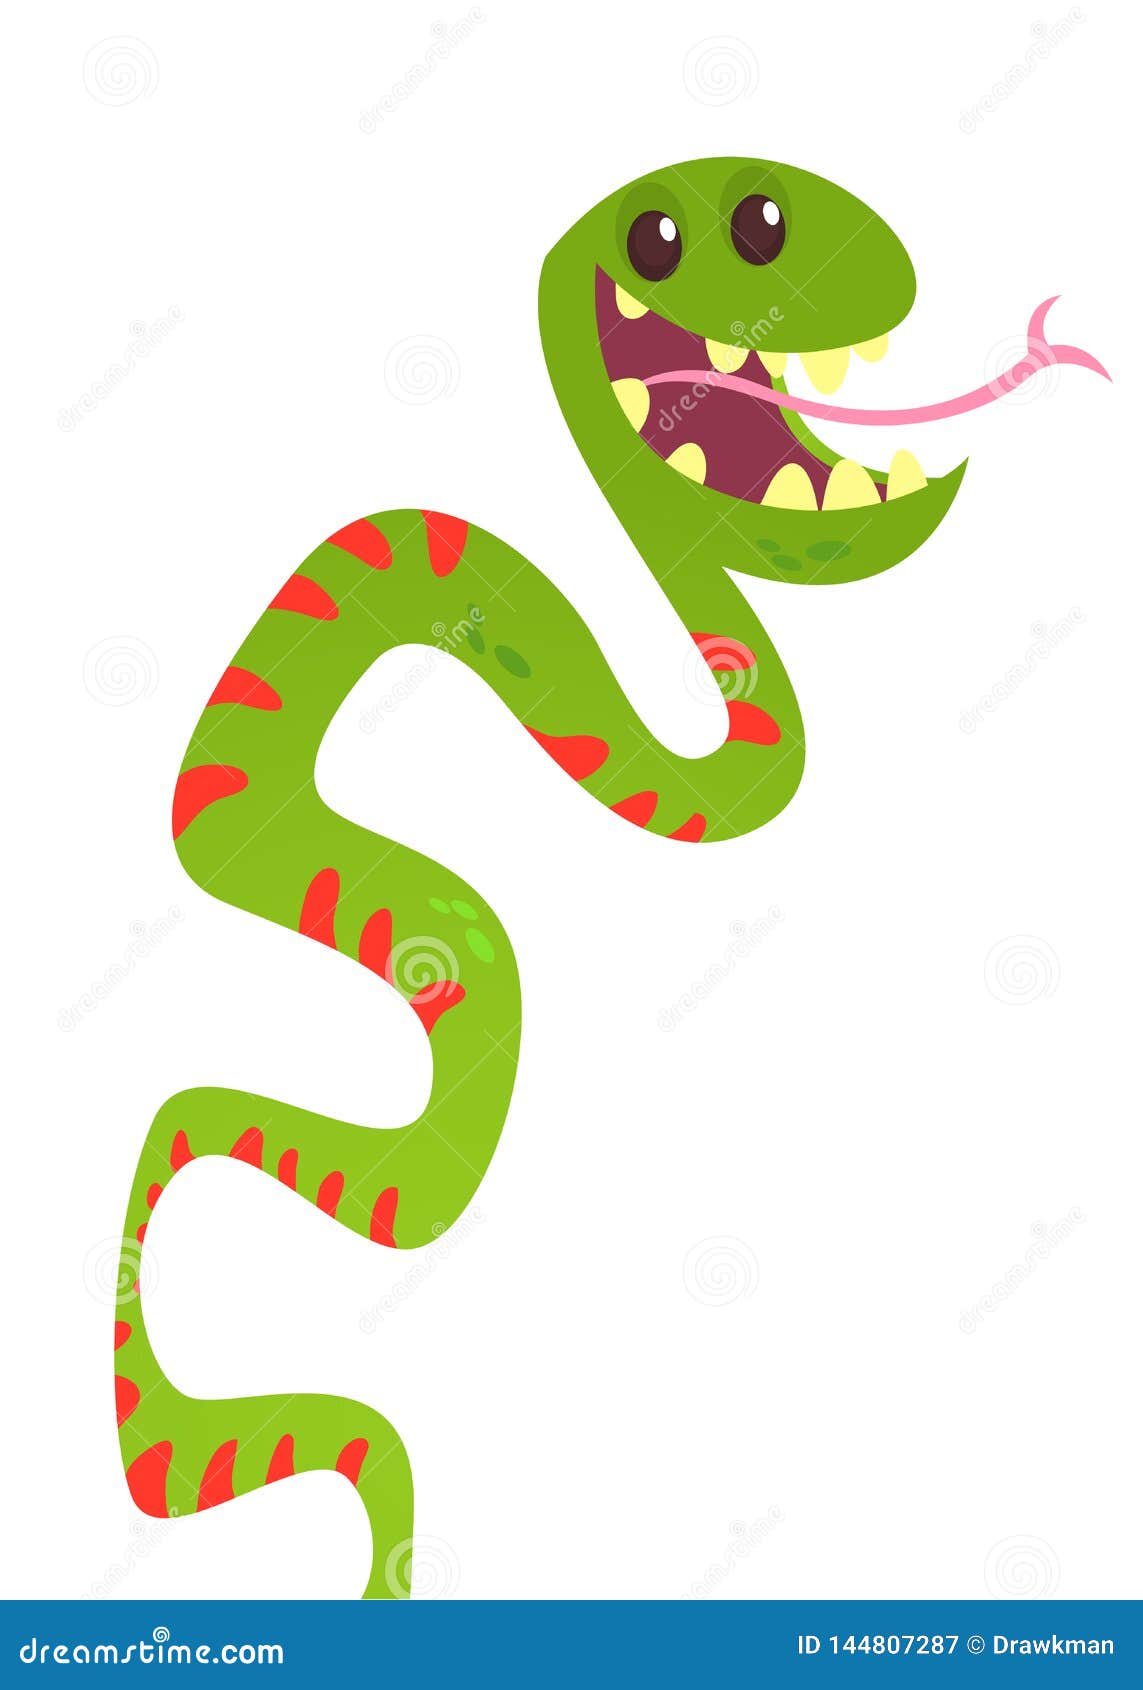 Cute Funny Snake Vector Cartoon. Snake Illustration Stock Vector -  Illustration of drawing, cartoon: 144807287